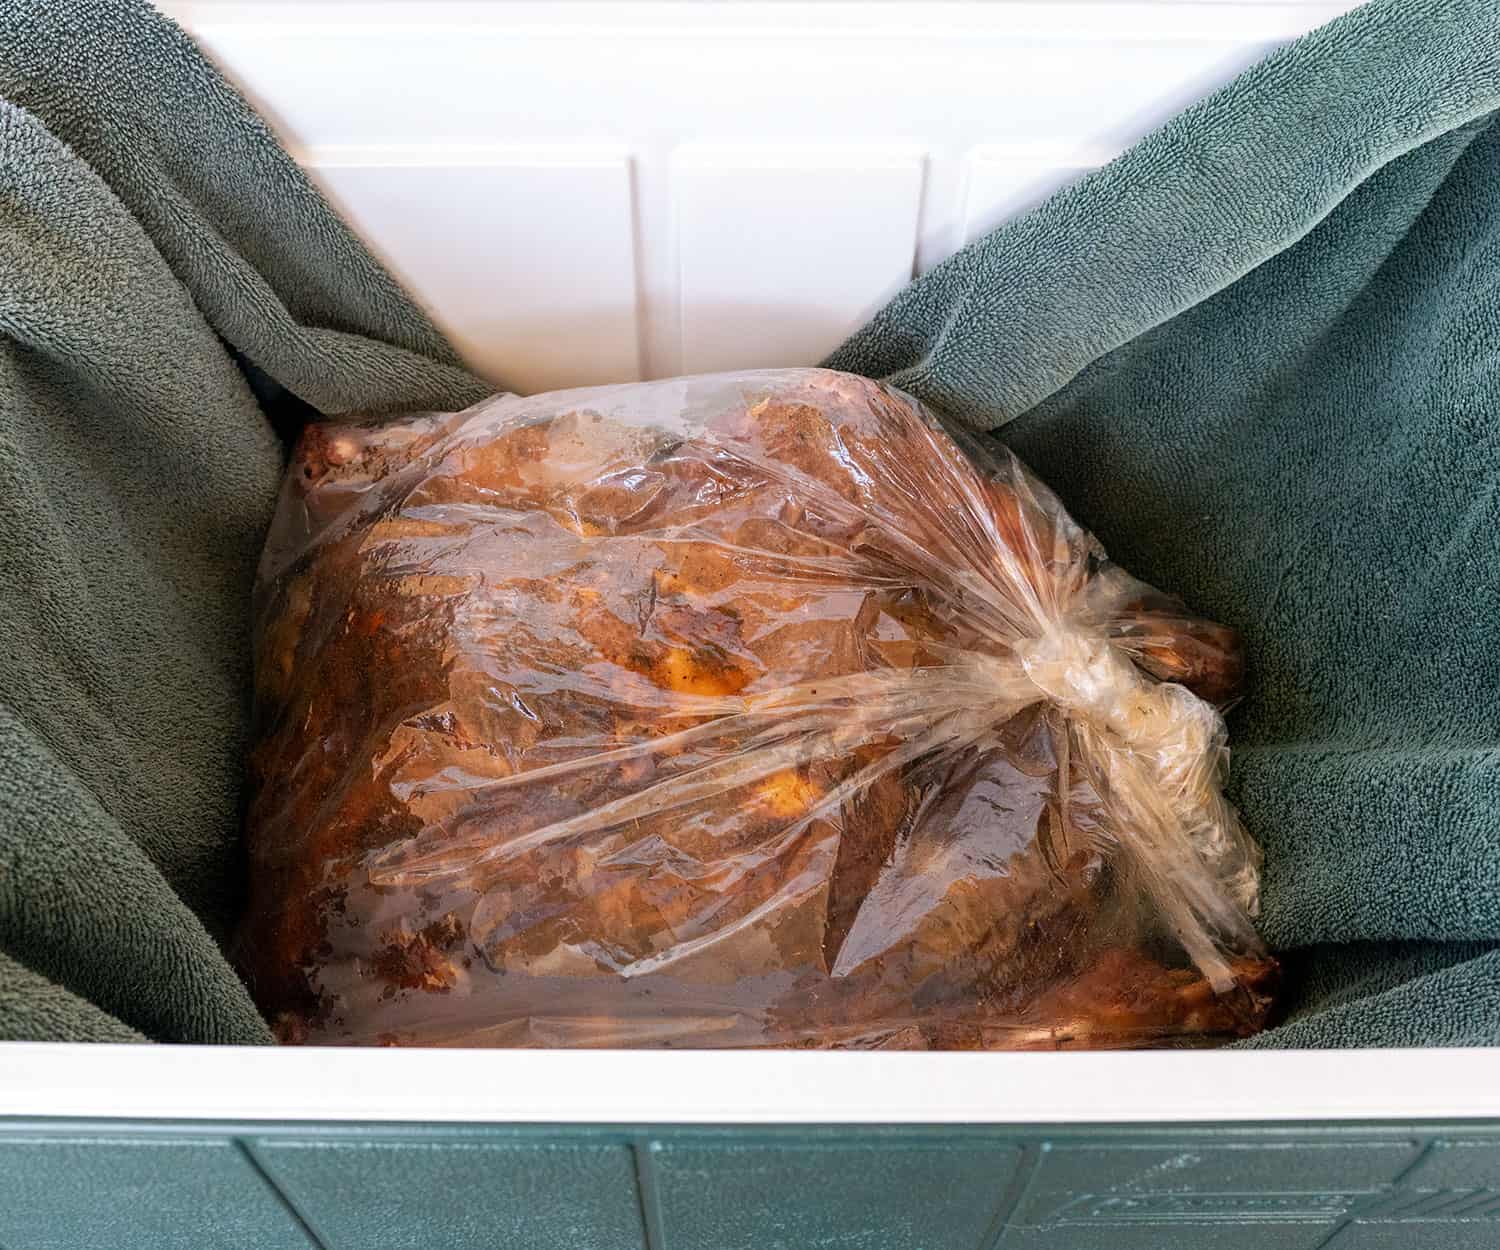 smoked turkey in bag in towel in cooler